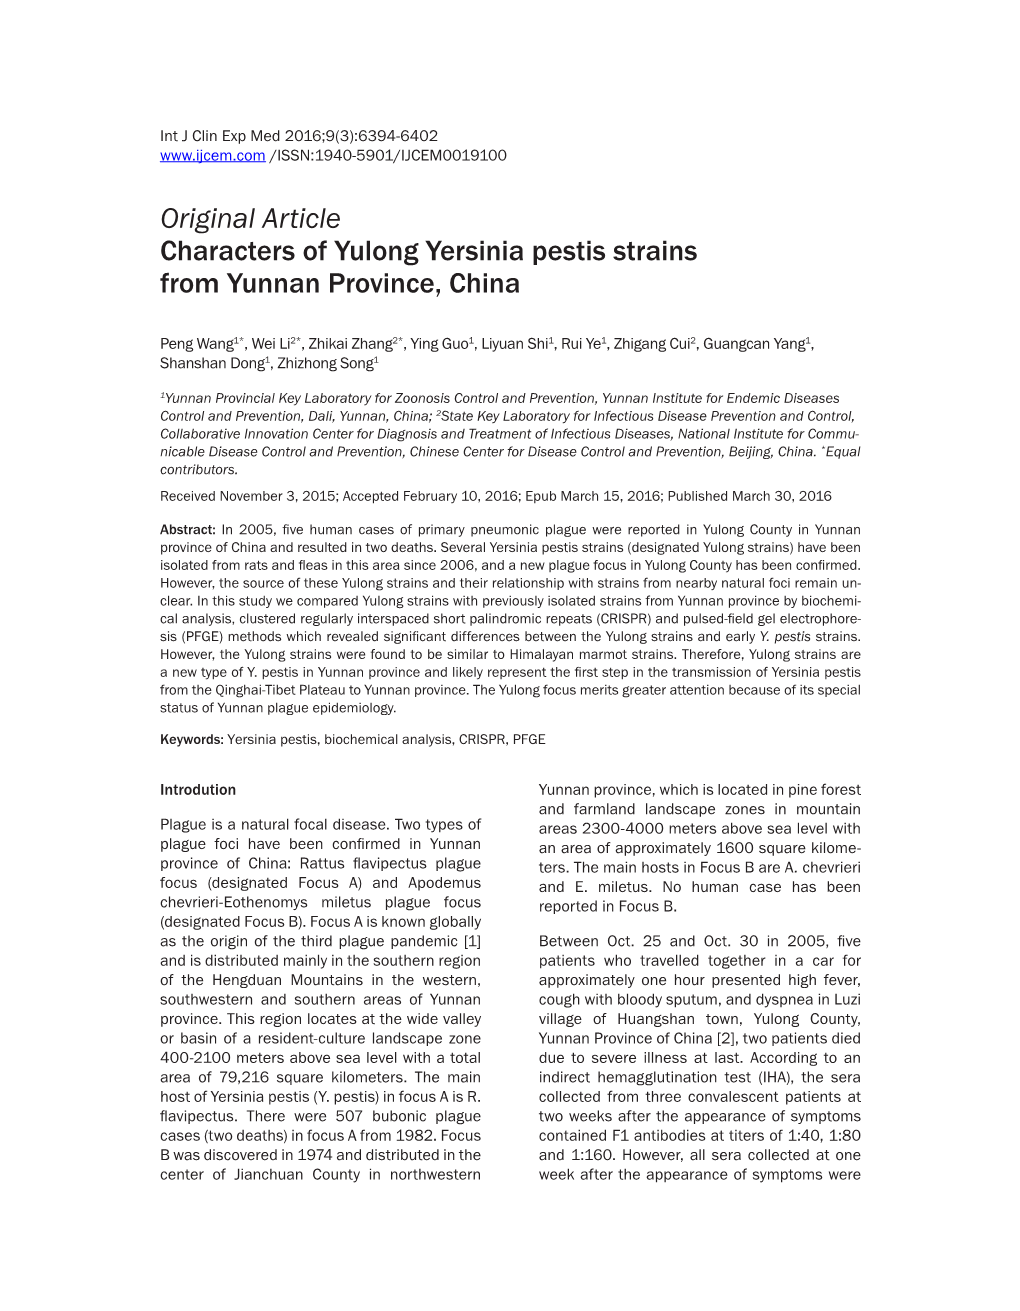 Original Article Characters of Yulong Yersinia Pestis Strains from Yunnan Province, China